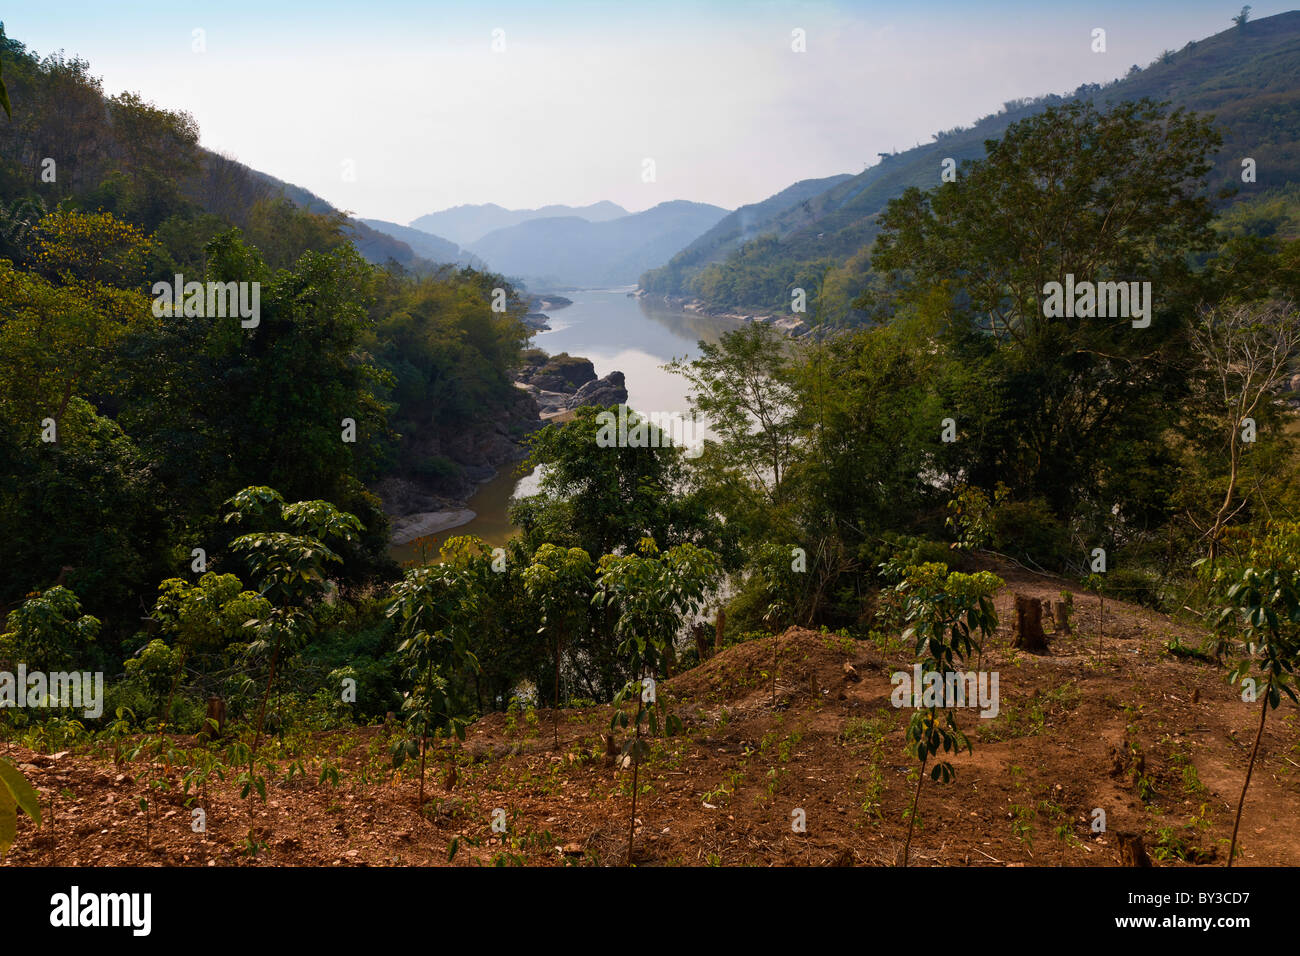 Der Lancang oder Mekong River, in der Nähe von Jinghong, Yunnan Provinz, Xishuangbanna Region, Volksrepublik China. JMH4237 Stockfoto